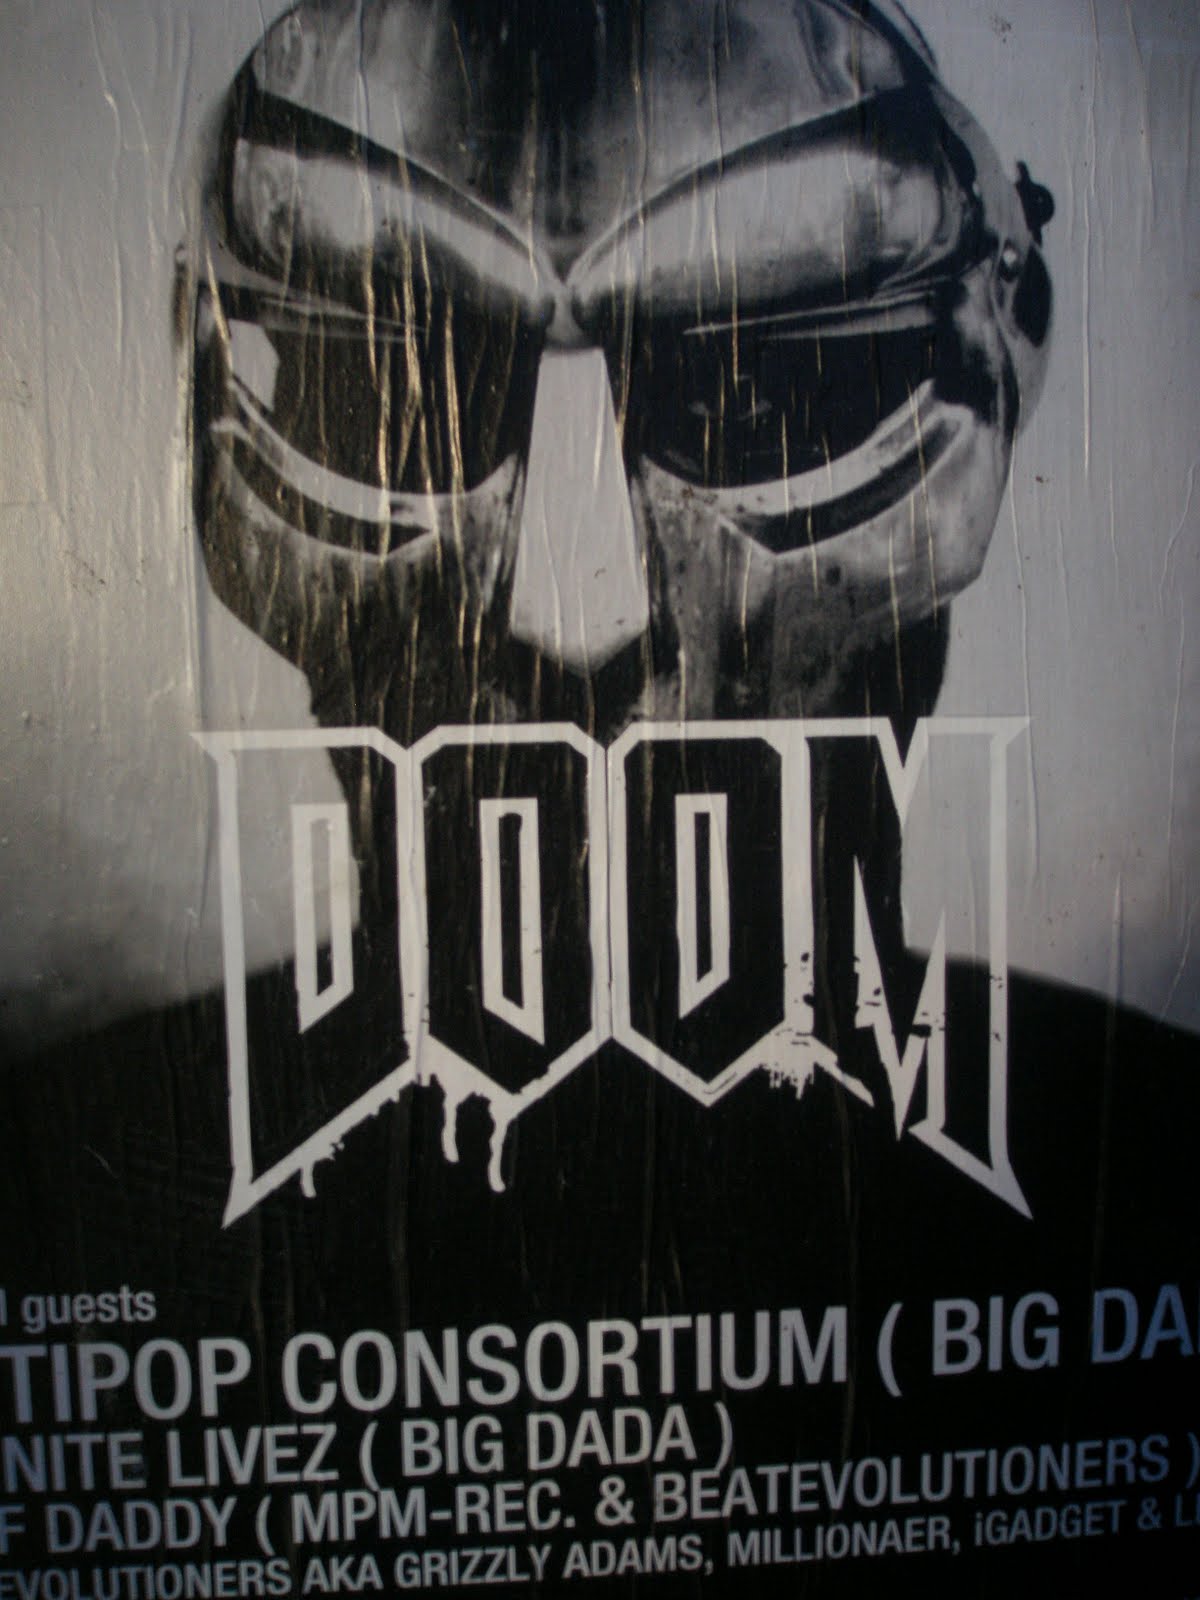 mf doom wallpaper - www.smscs.com